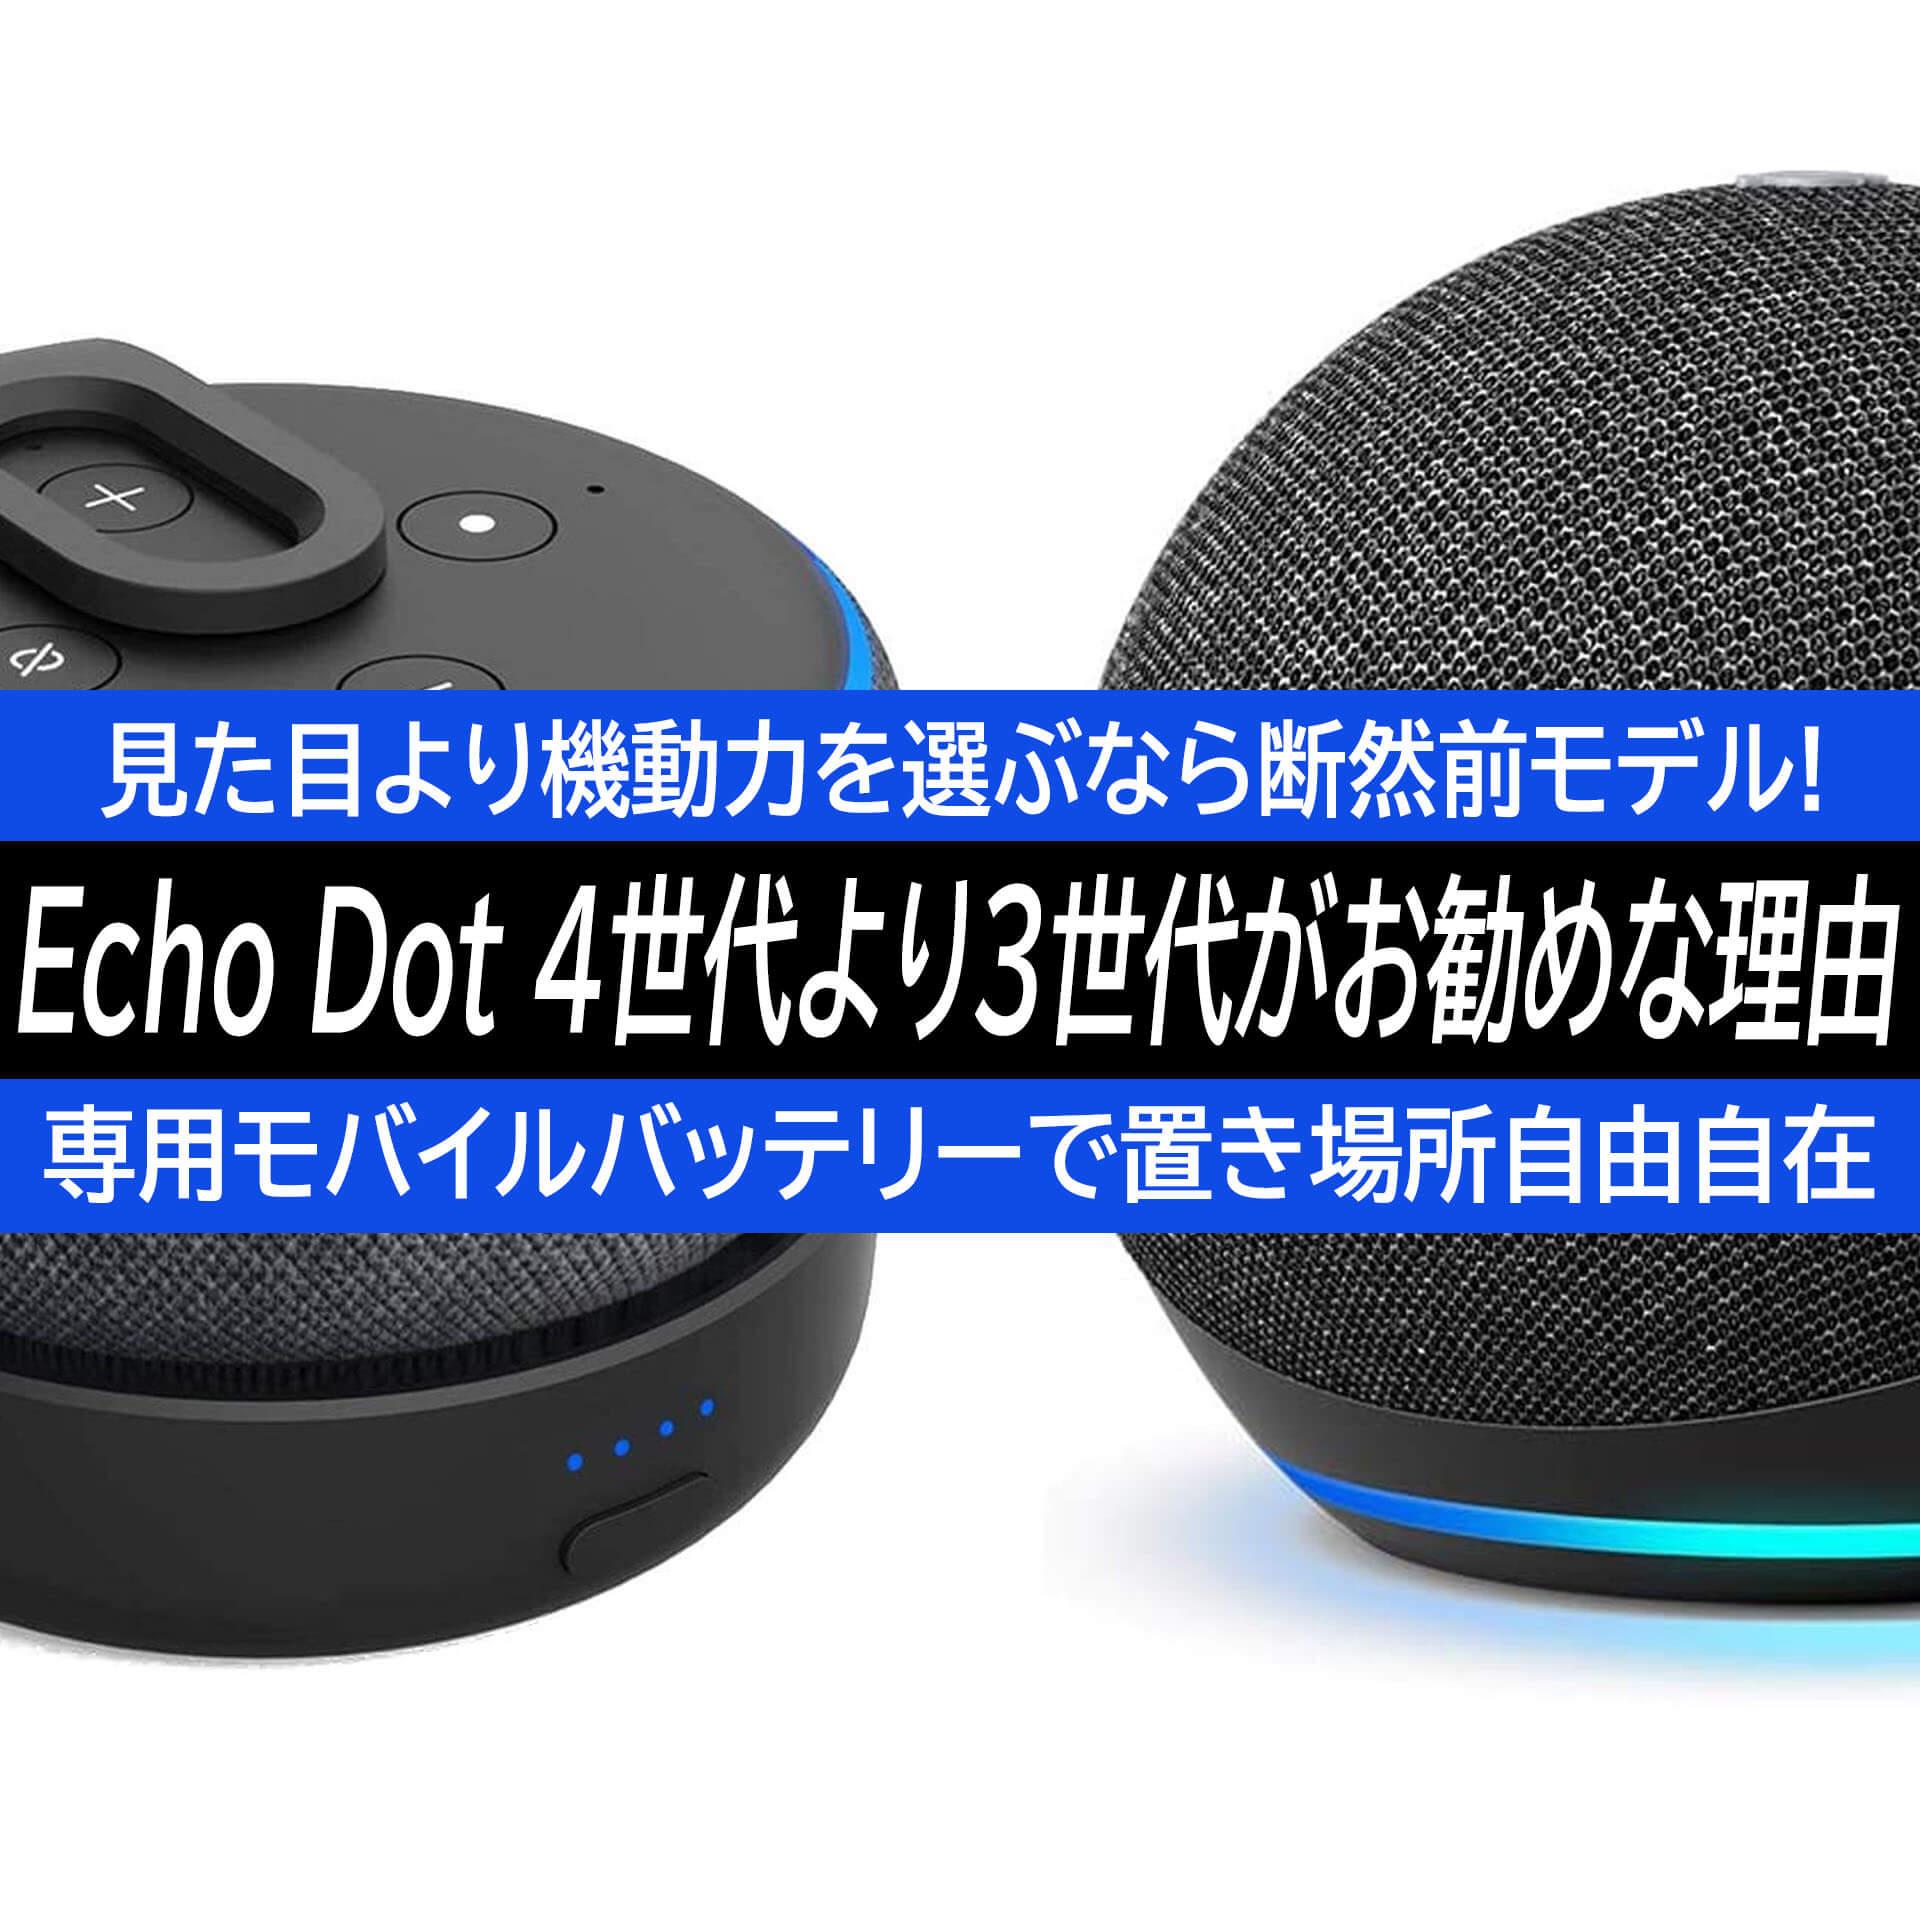 Echo Dot (エコードット) 第4世代 -Alexa、グレーシャーホワイト